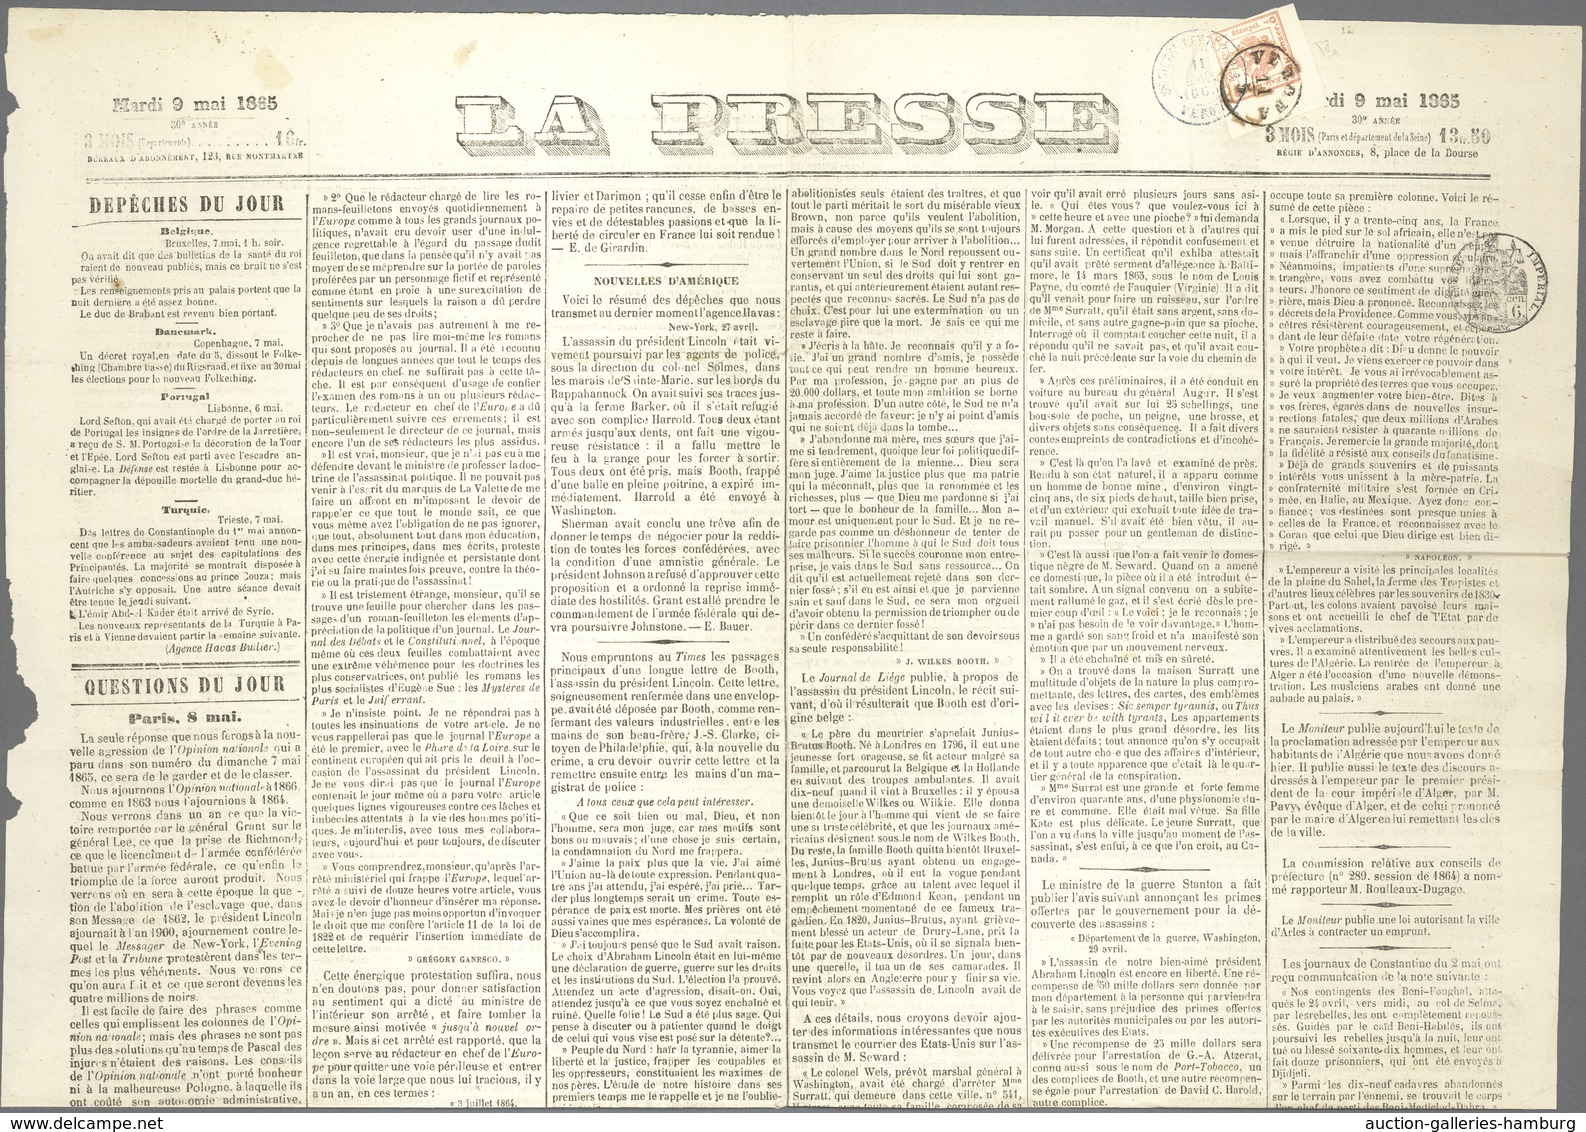 Österreich - Lombardei Und Venetien - Zeitungsstempelmarken: 1859, 2 Kreuzer Rot, Type II, Linkes Un - Lombardy-Venetia